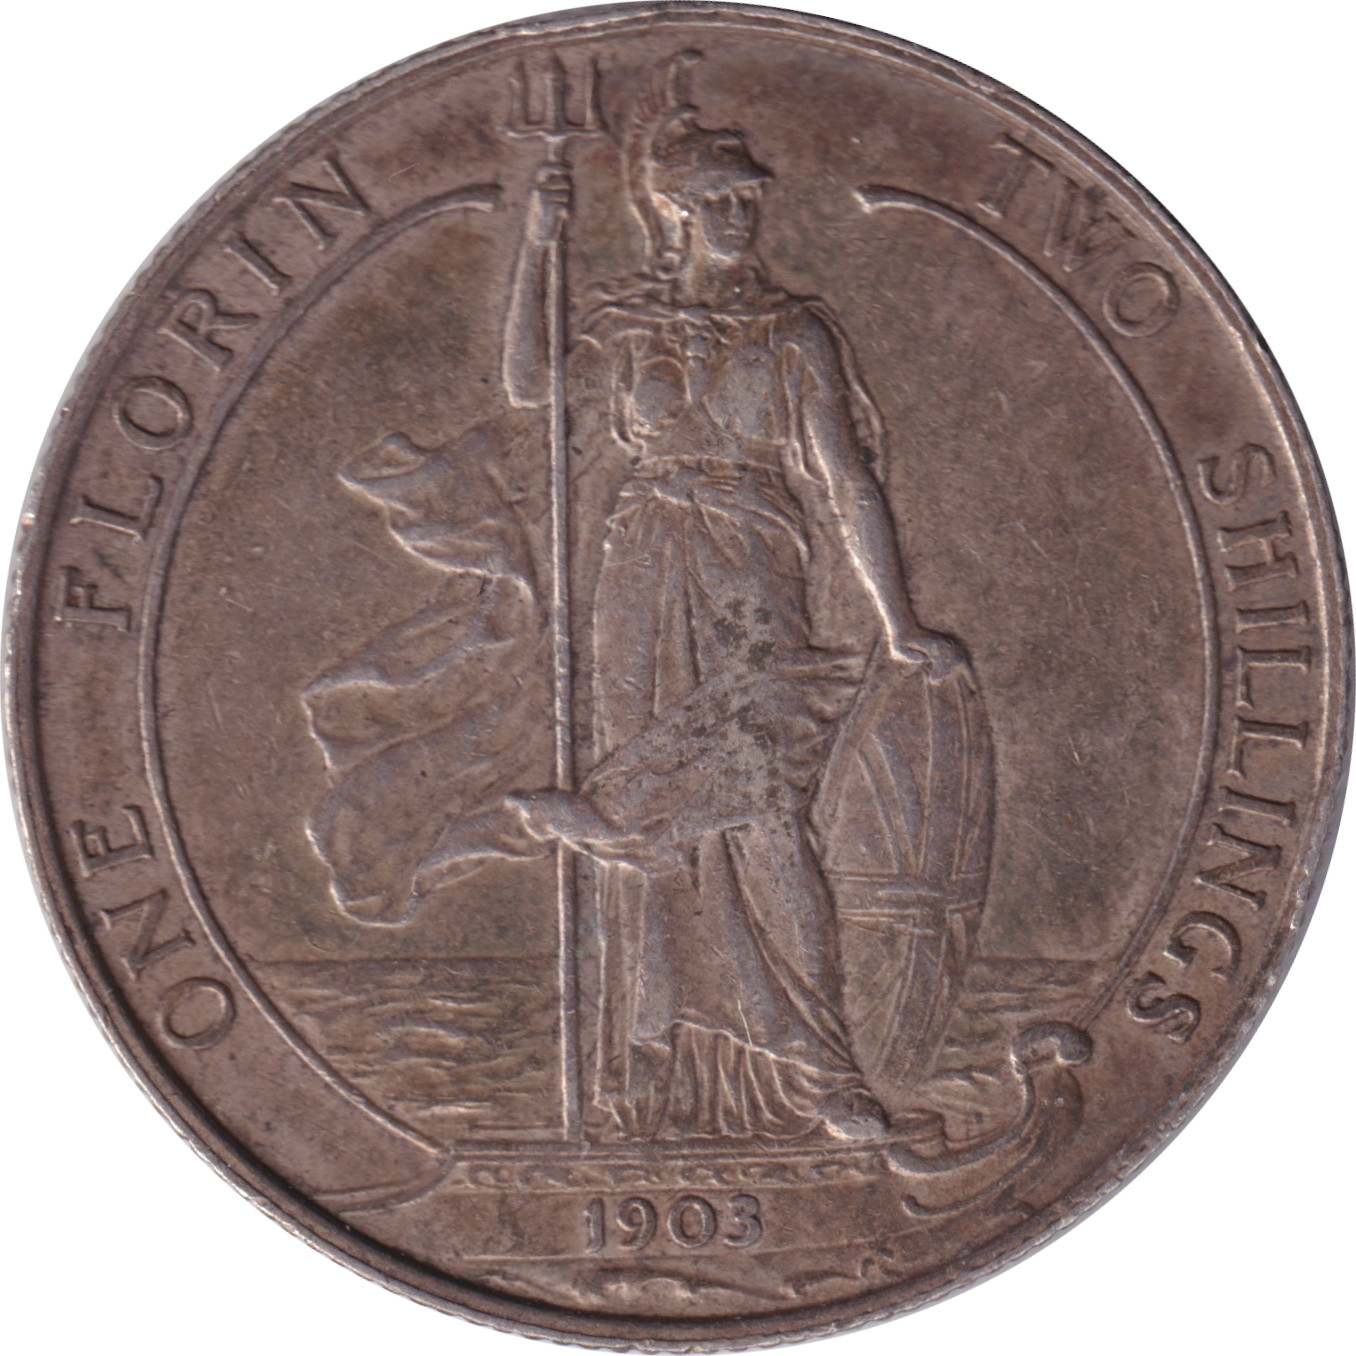 1 florin - Edward VII